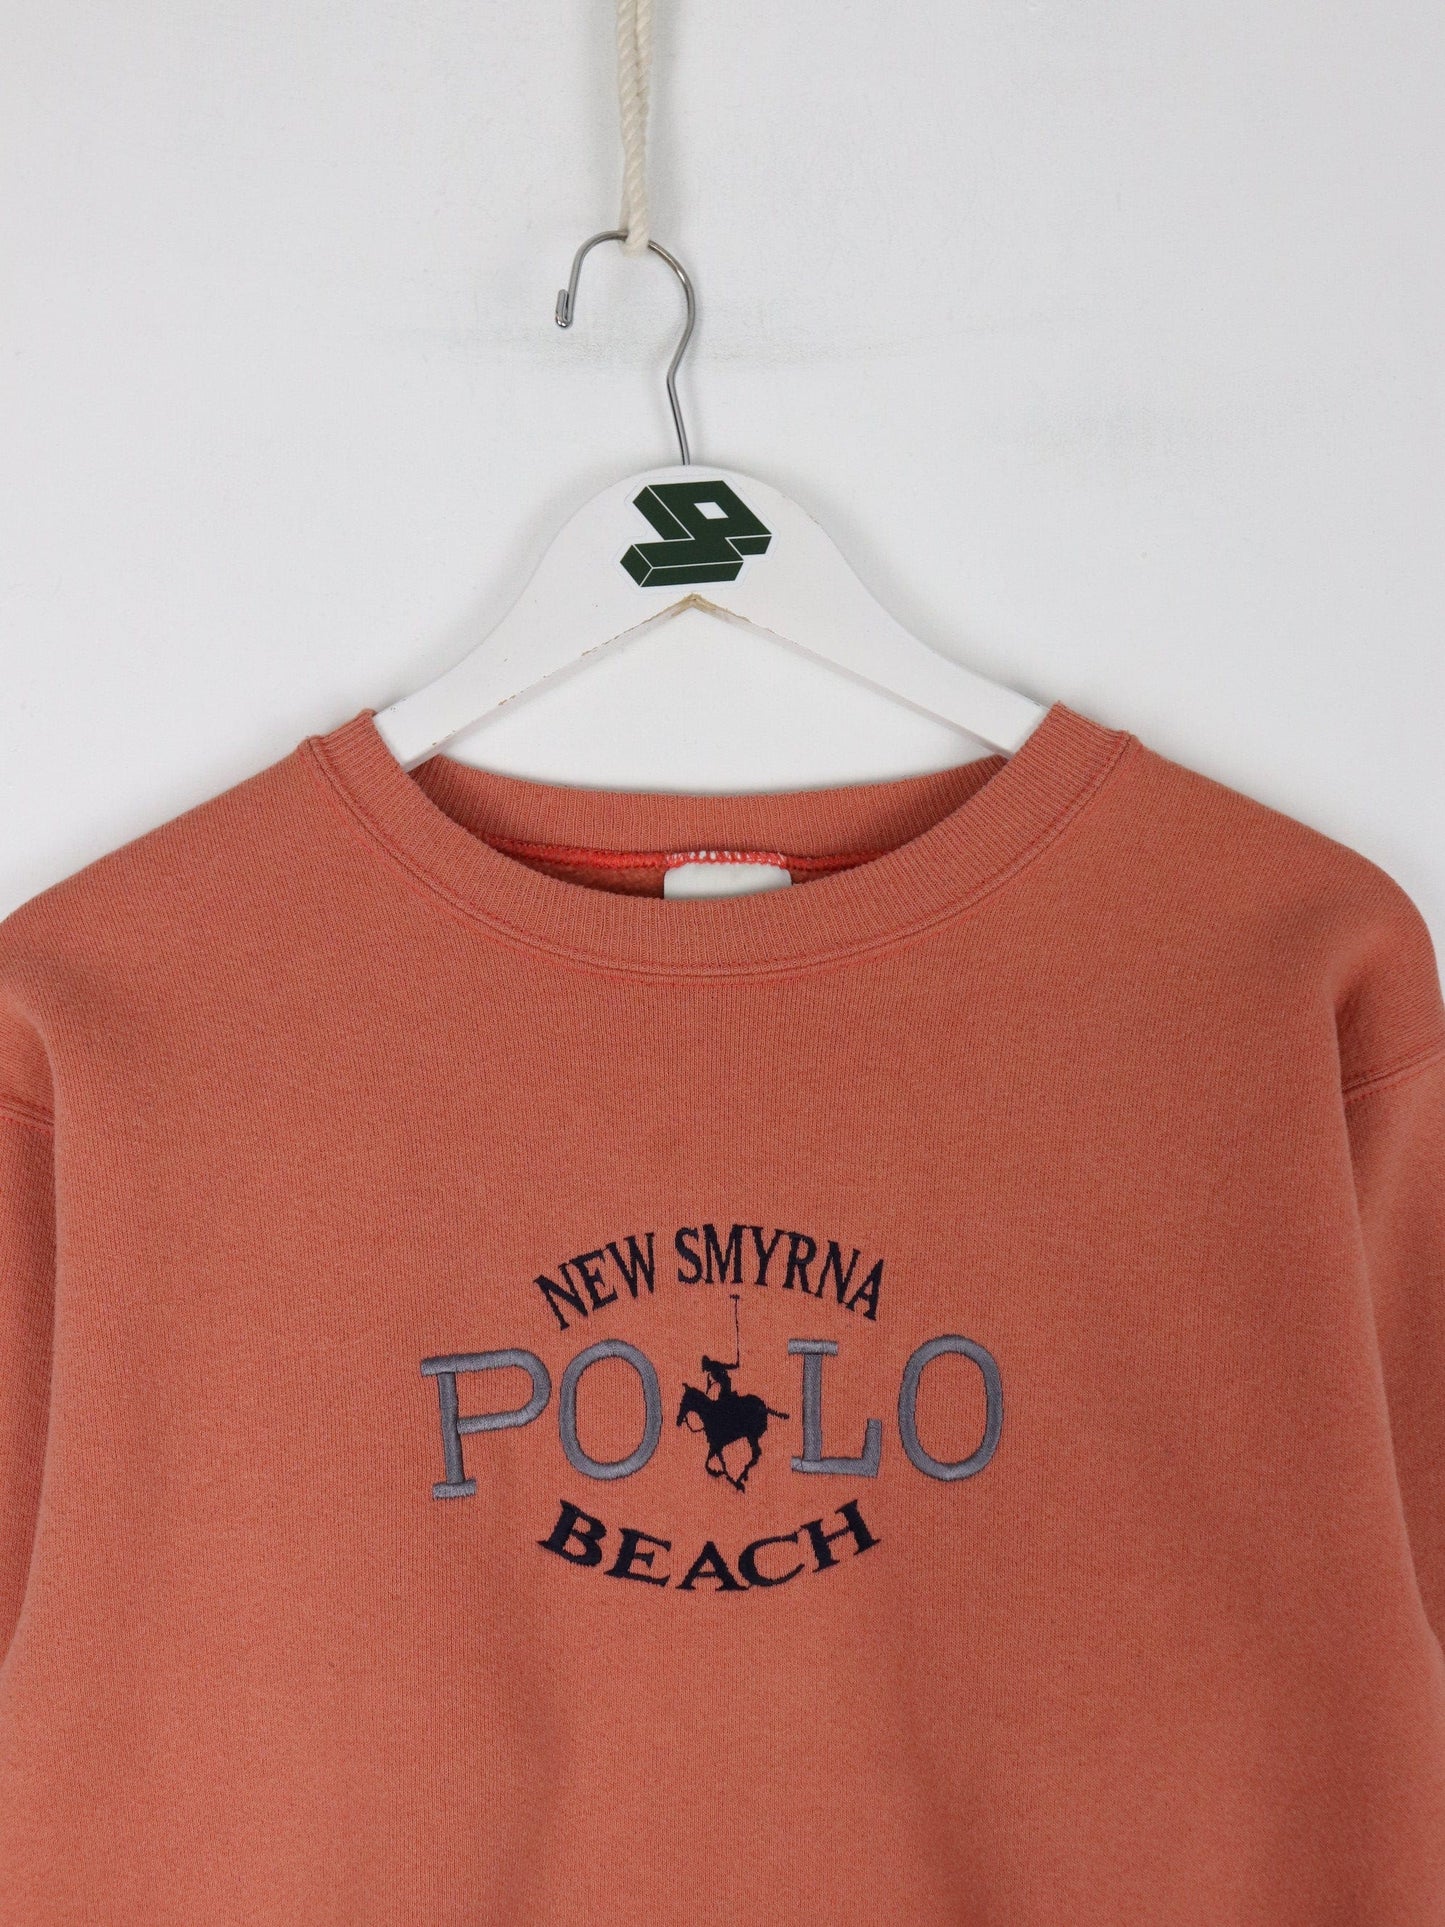 Other Sweatshirts & Hoodies Vintage New Smyrna Beach Polo Sweatshirt Mens Small Orange 90s